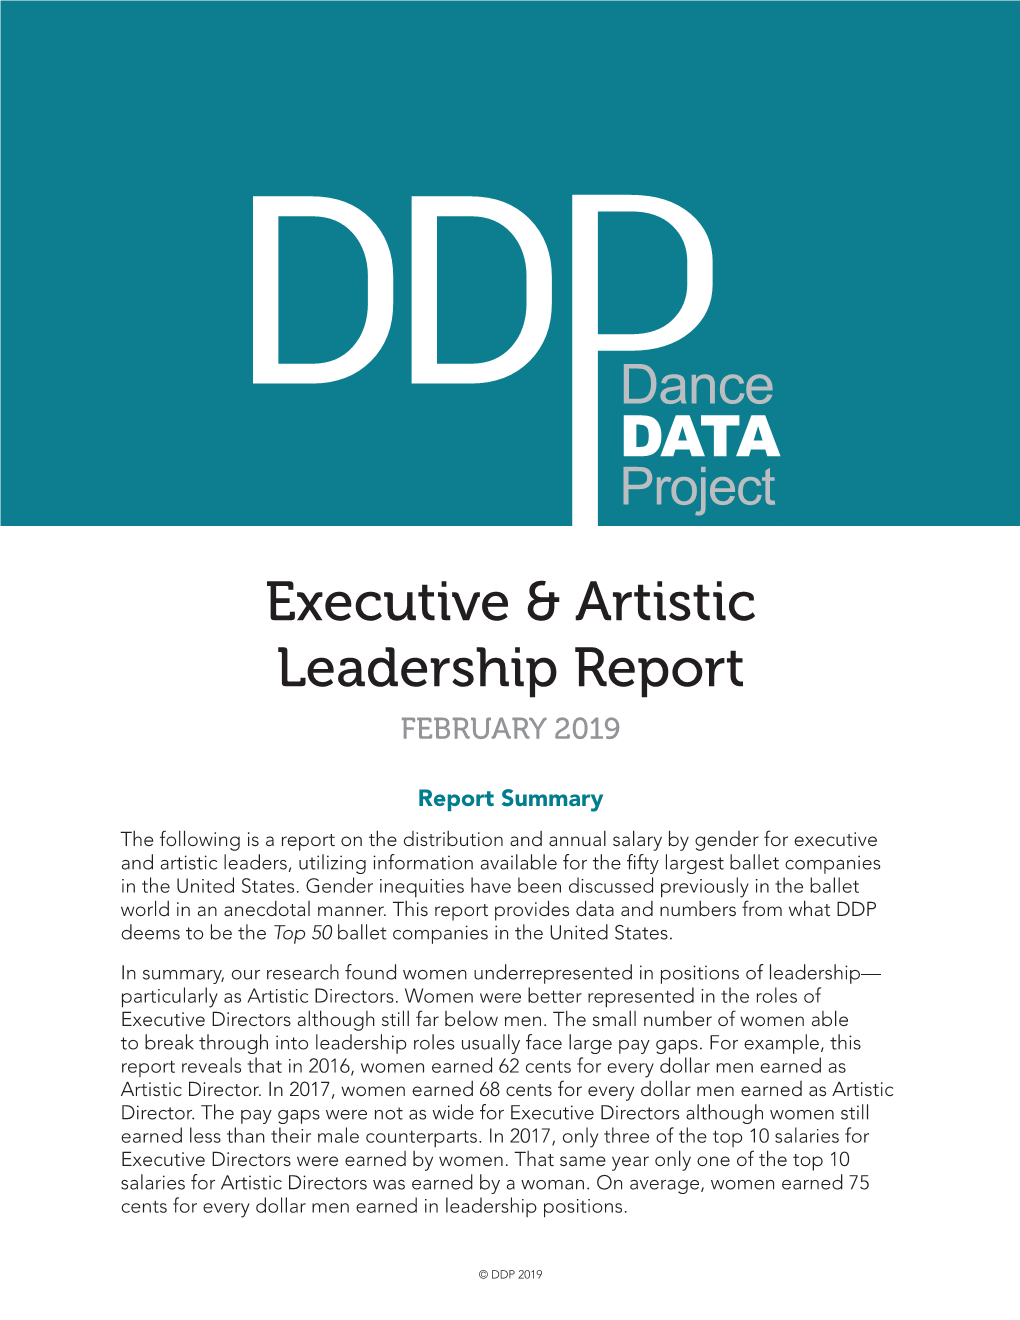 Executive & Artistic Leadership Report